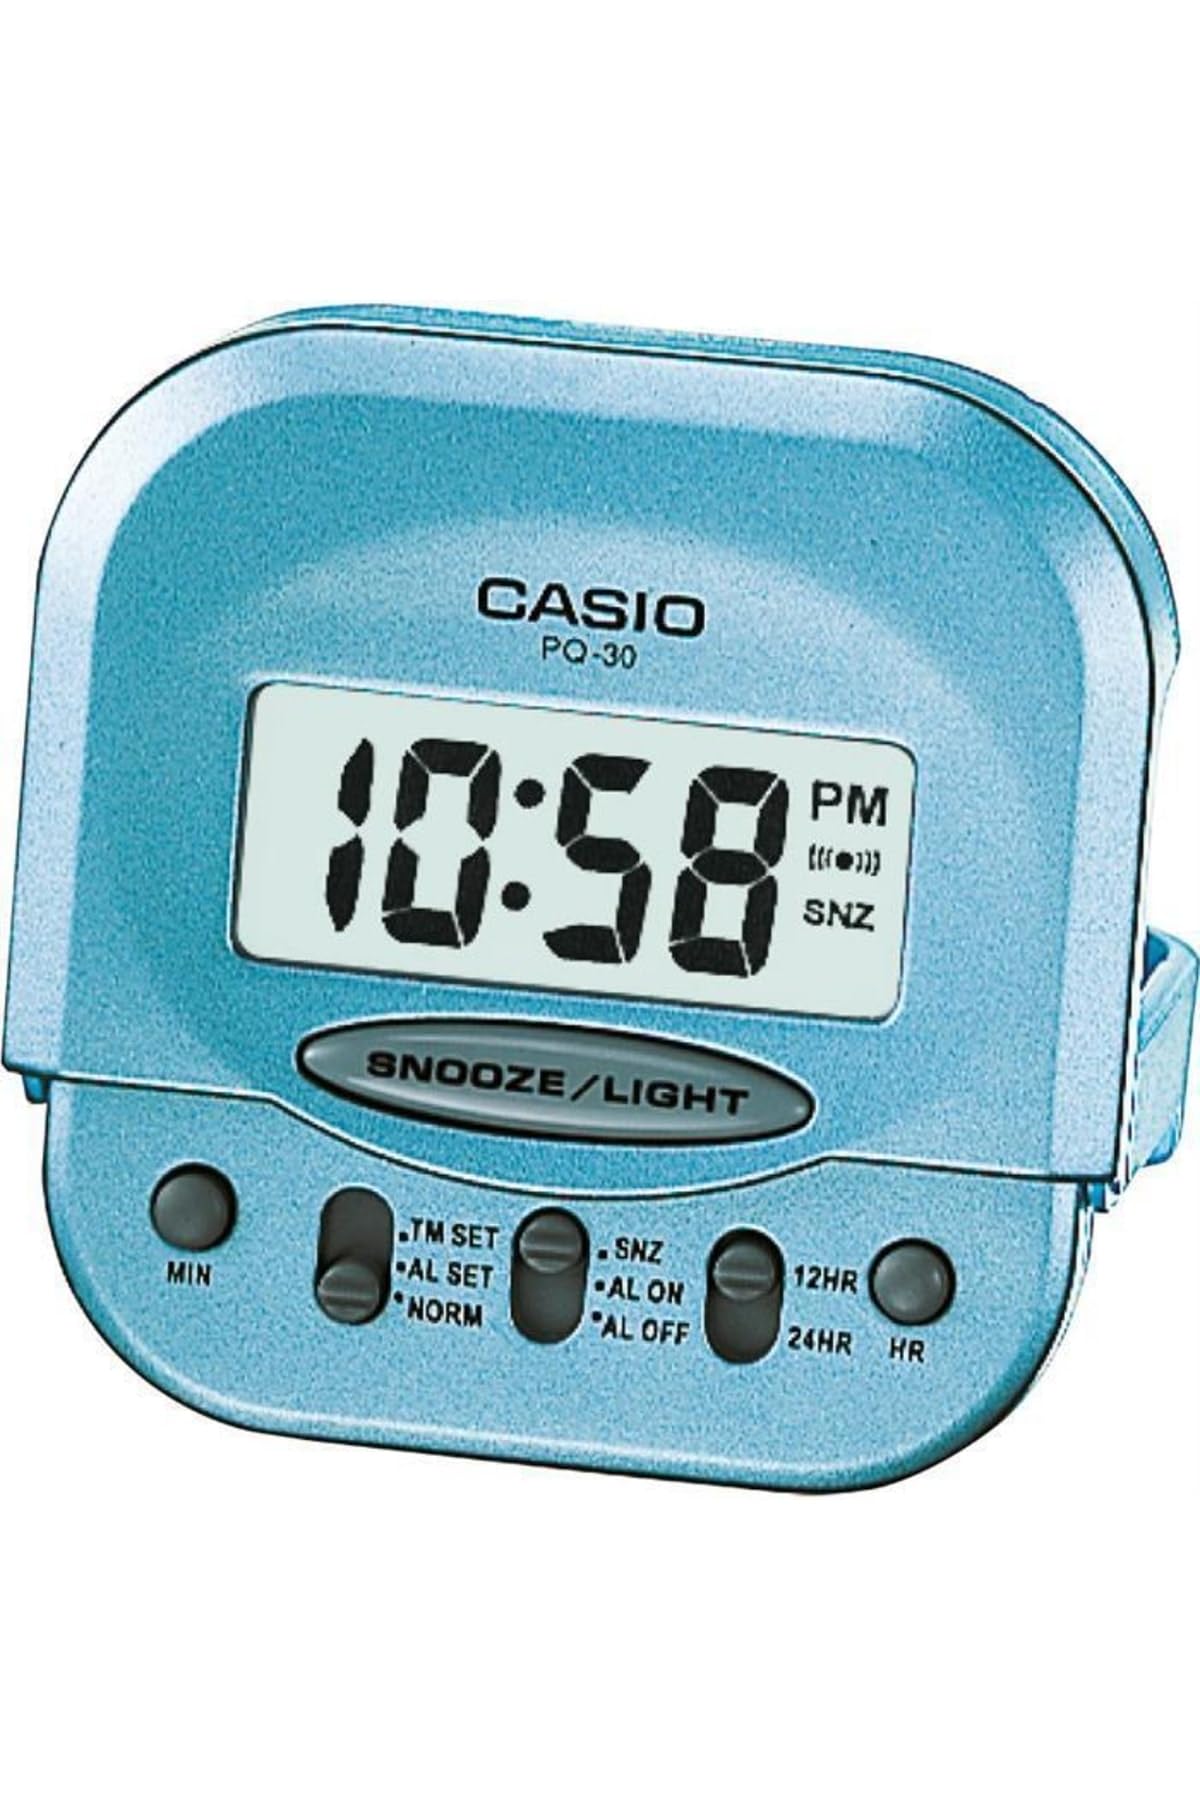 Casio - Clock - PQ-30-2 - Blue